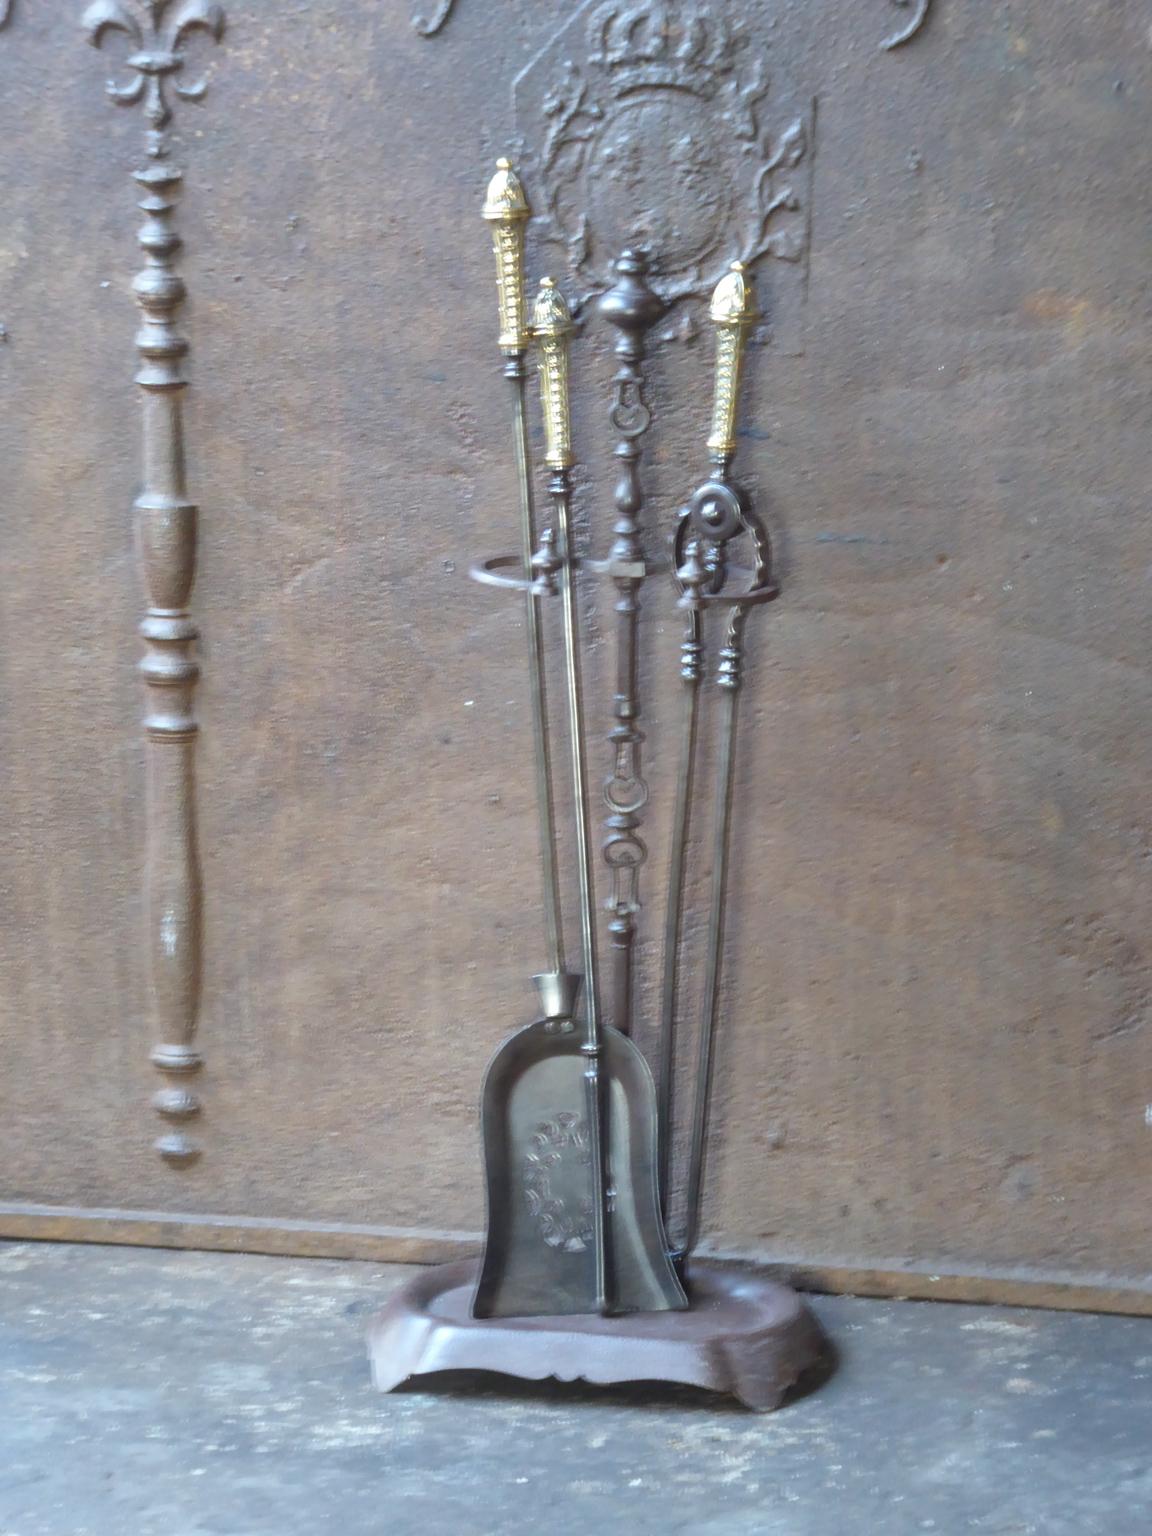 British Georgian Fireplace Tool Set or Fire Irons, 18th-19th Century